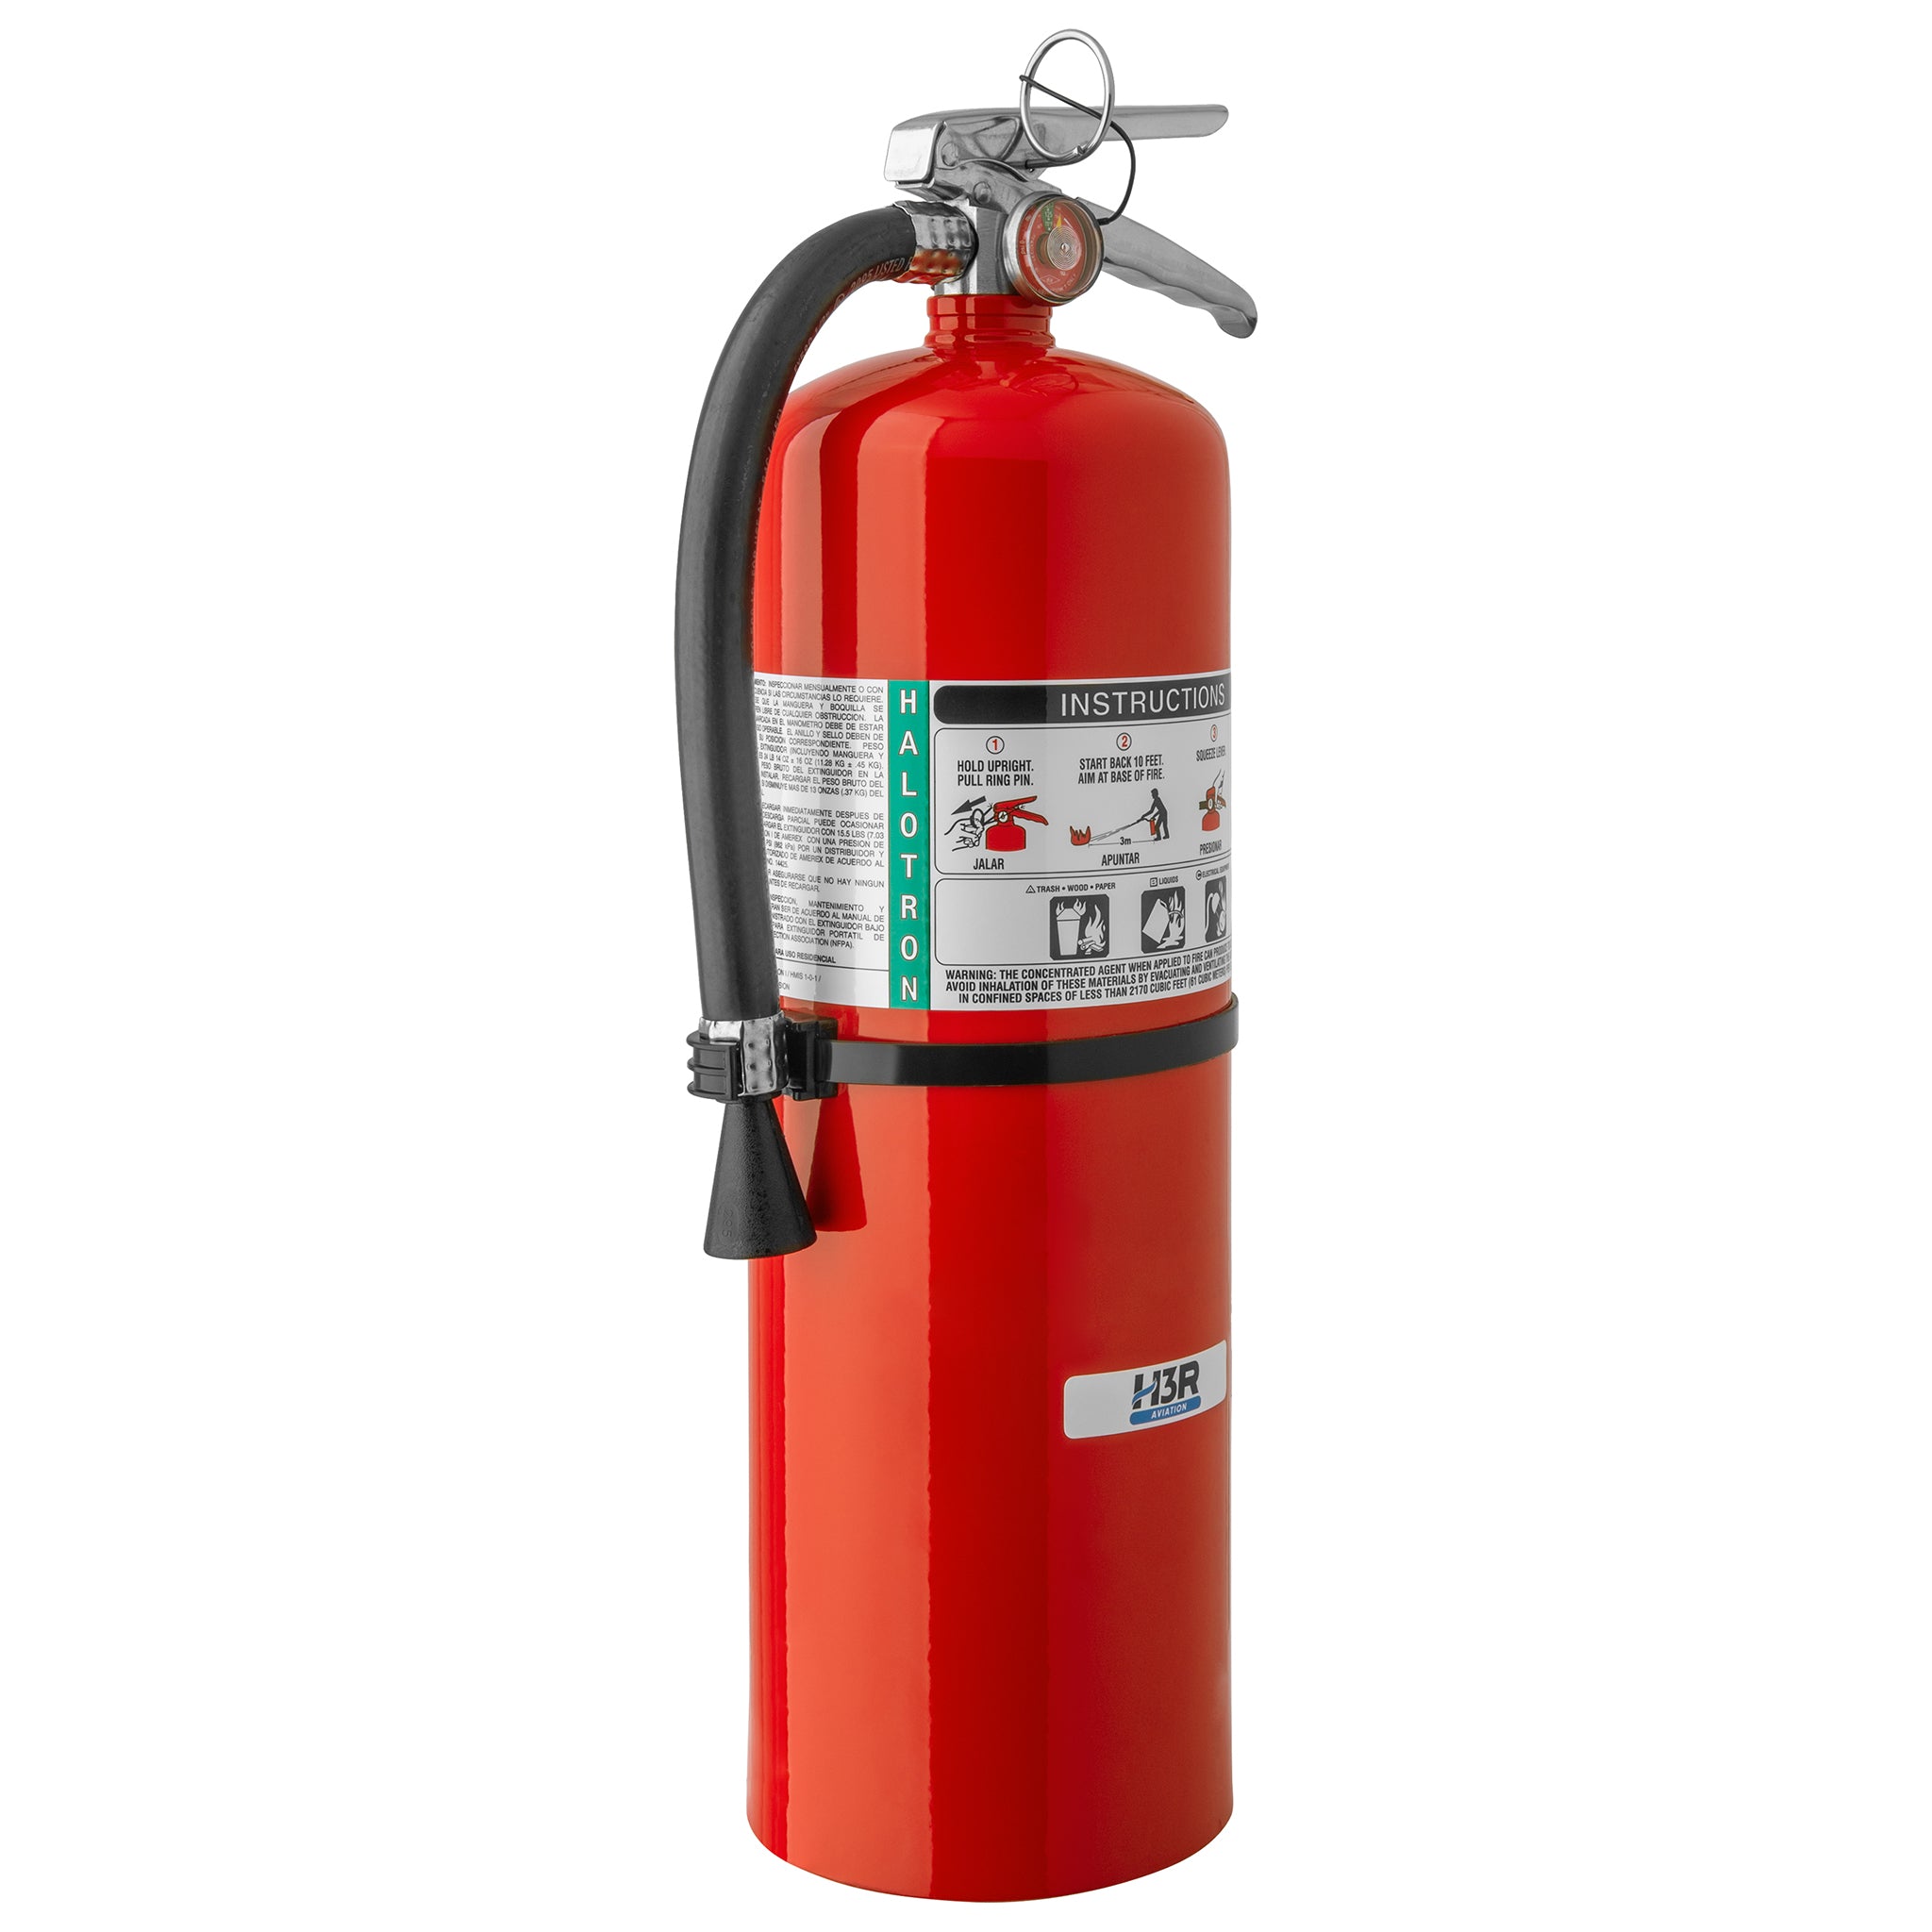 398 - 15.5 lb. Halotron 1 Fire Extinguisher